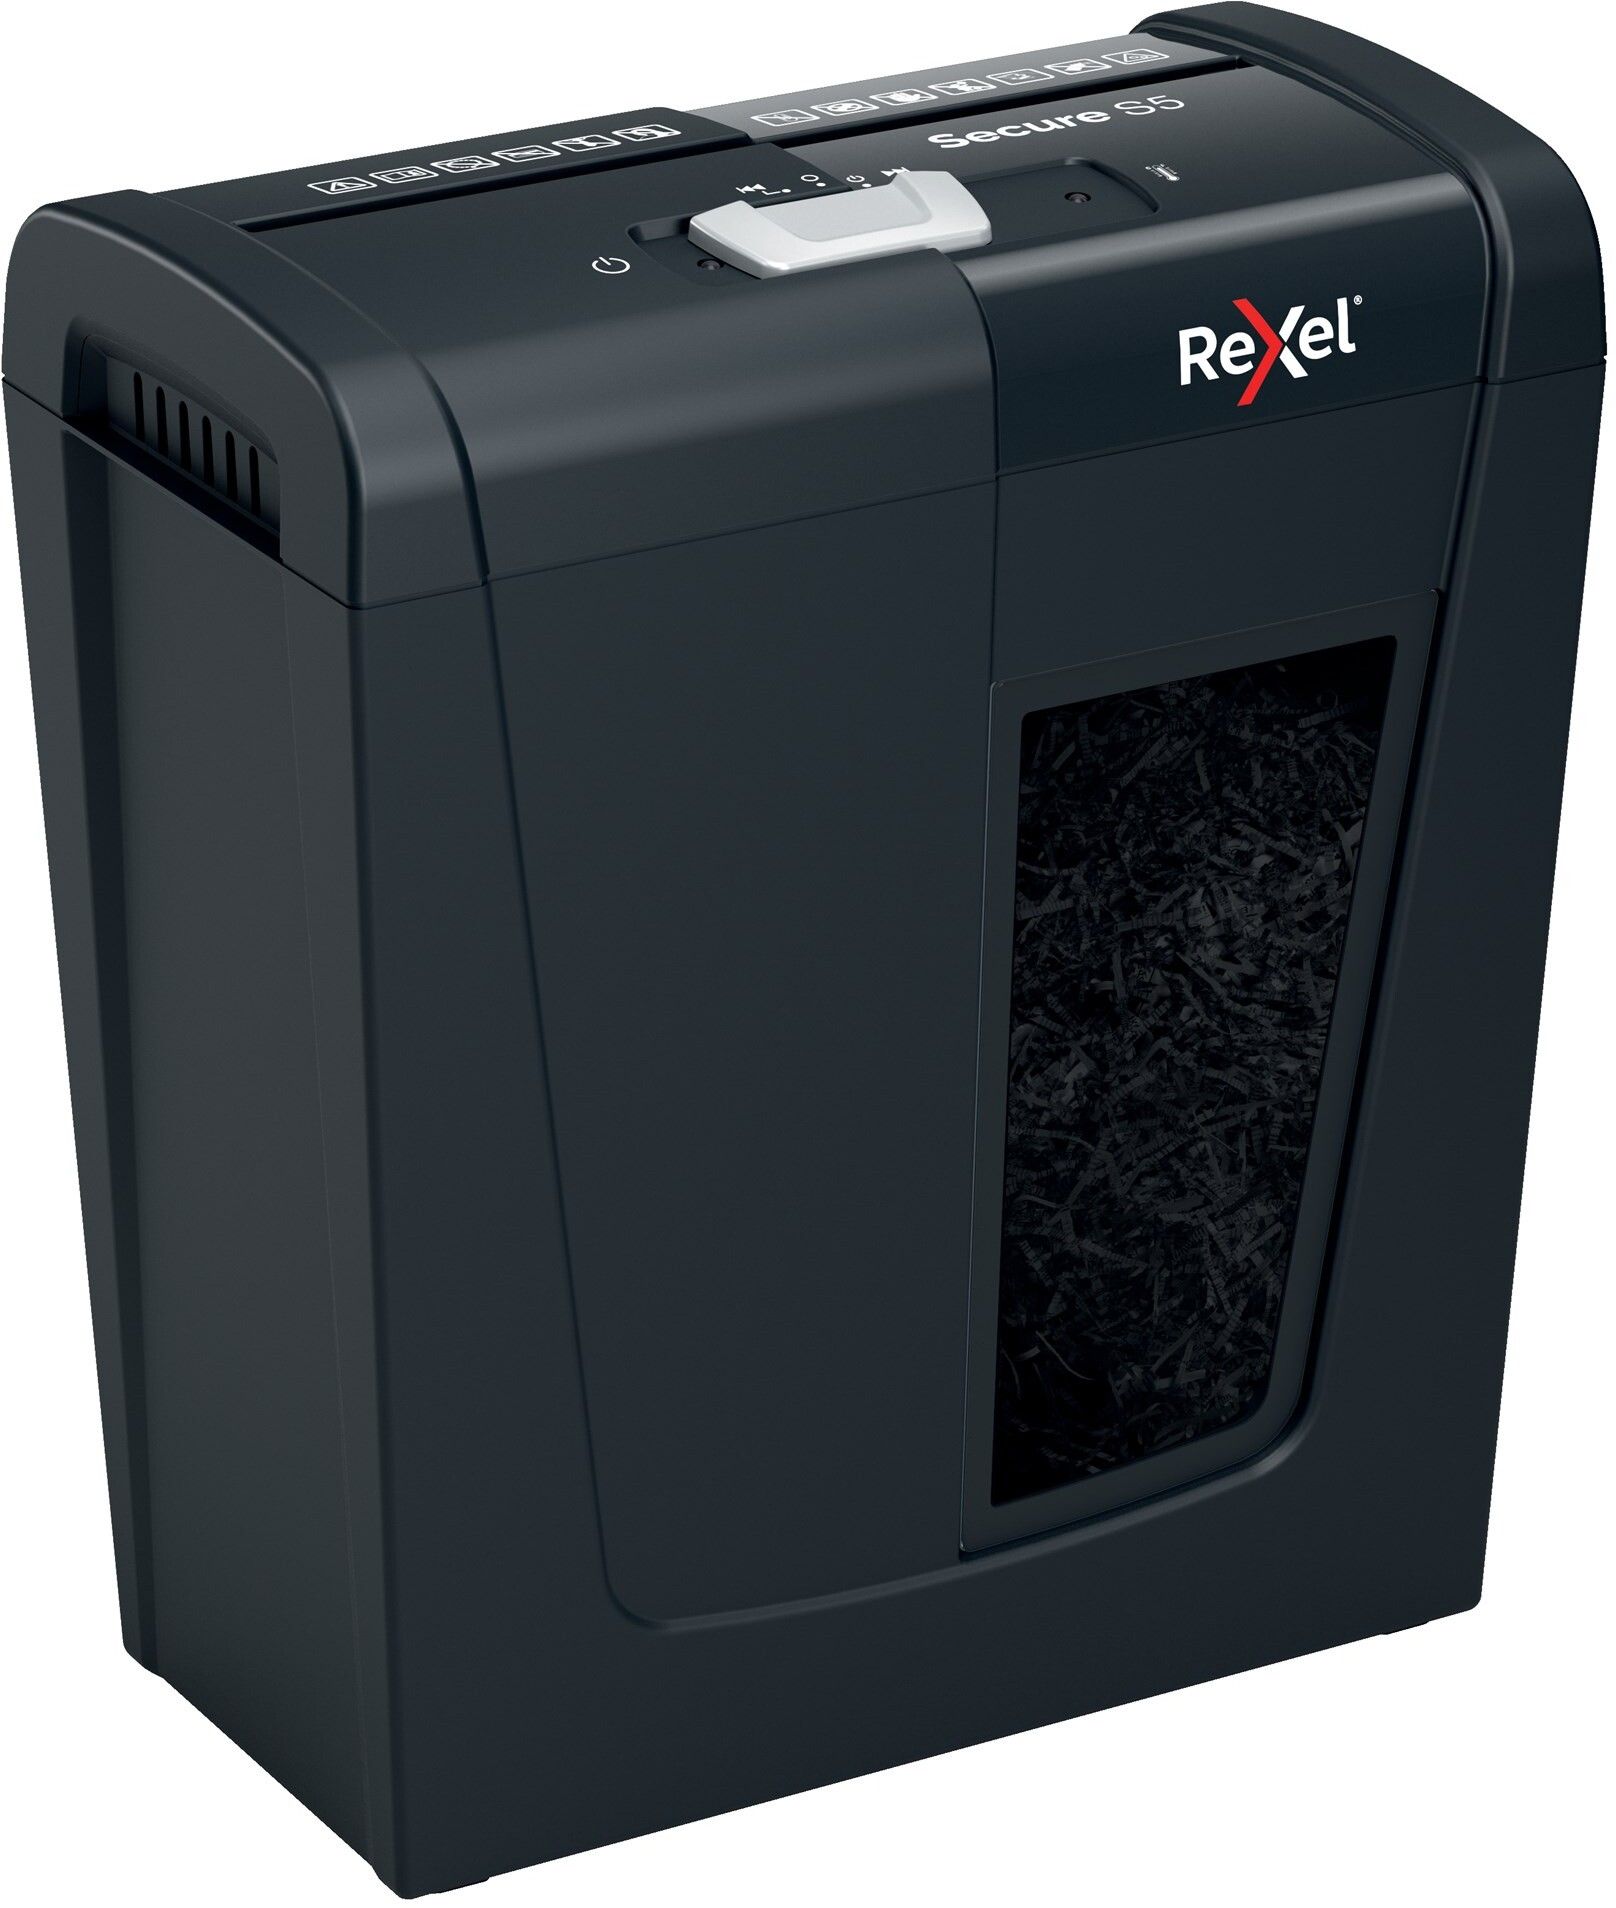 Rexel Secure S5 makuleringsmaskin